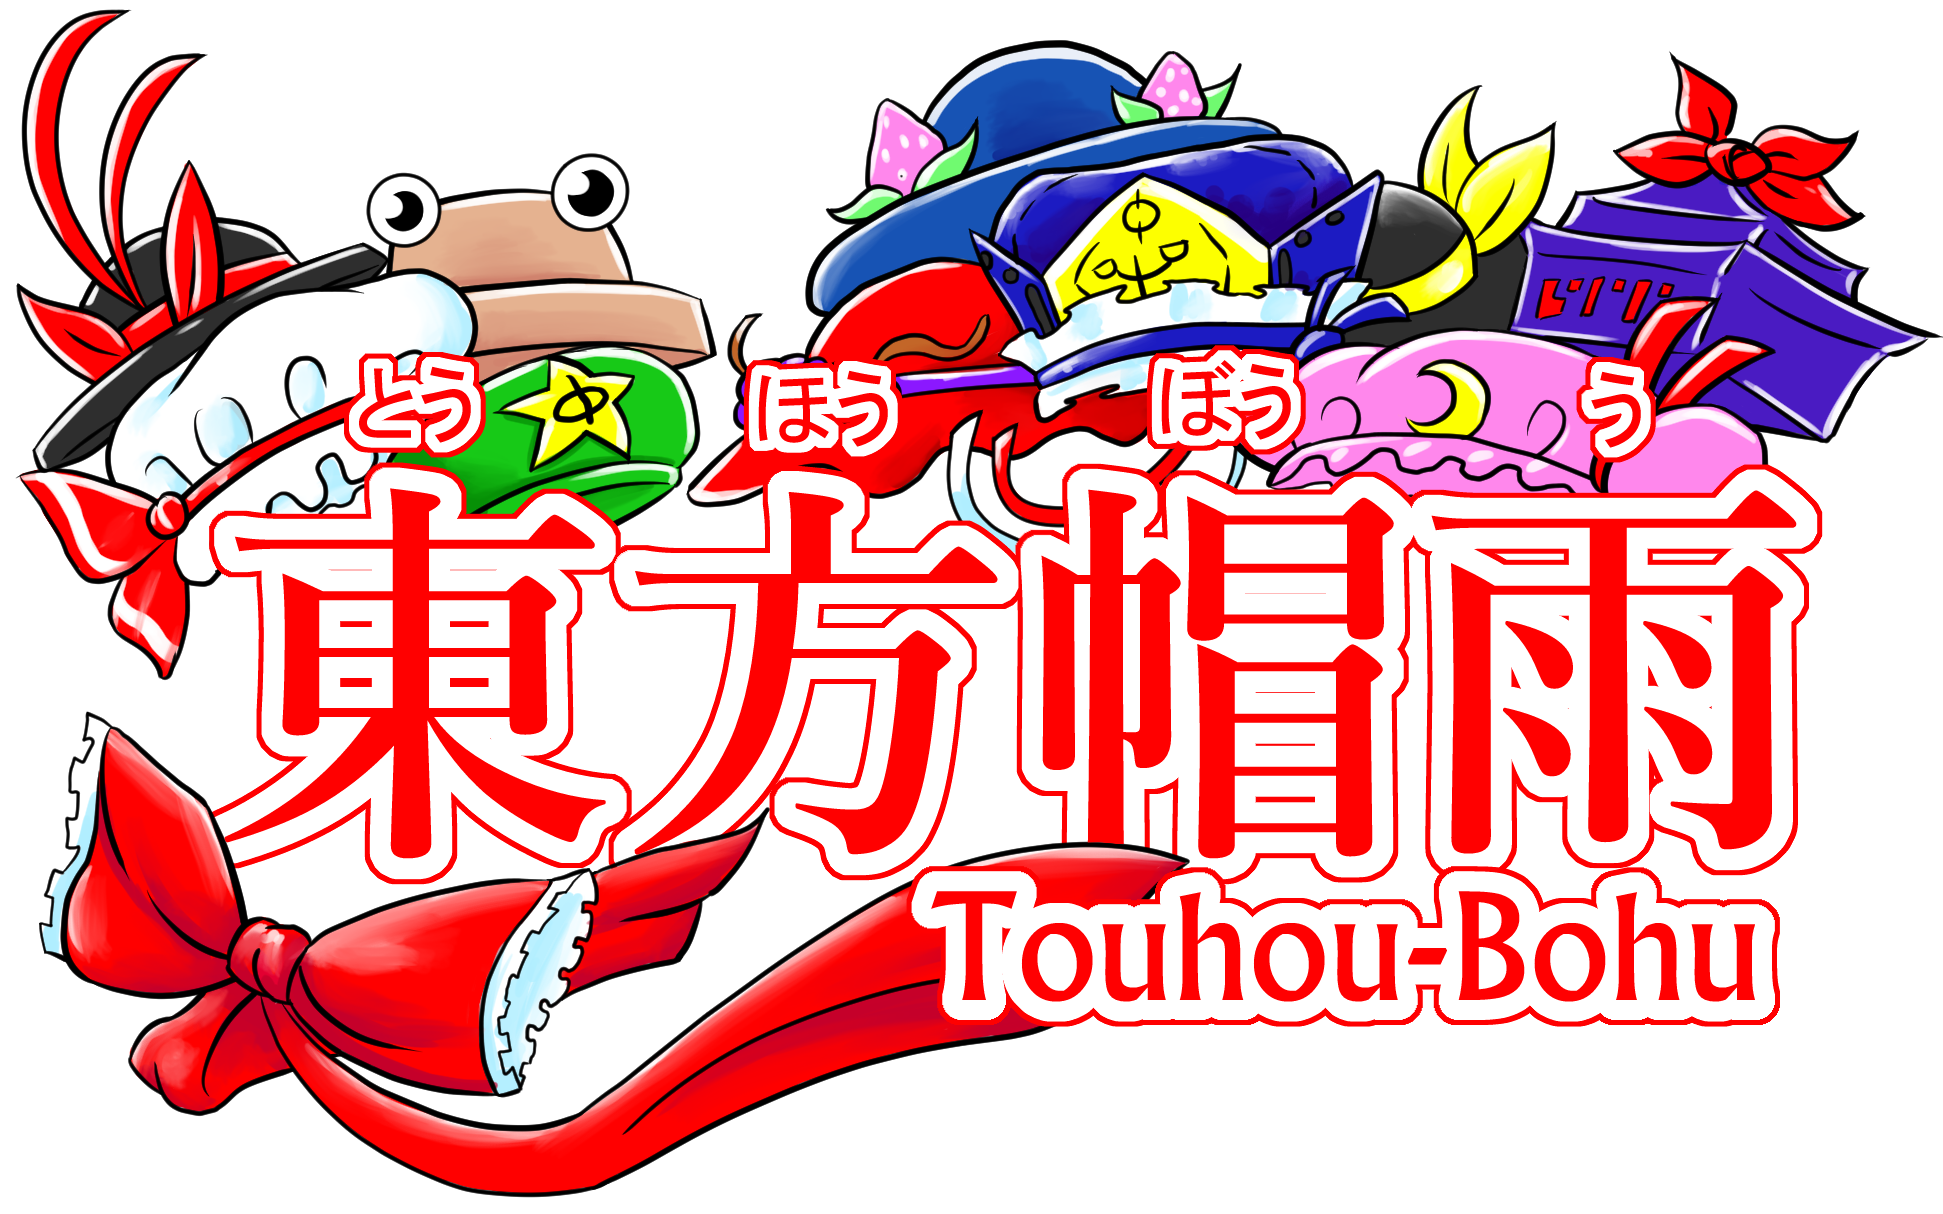 Touhou-Bohu logo